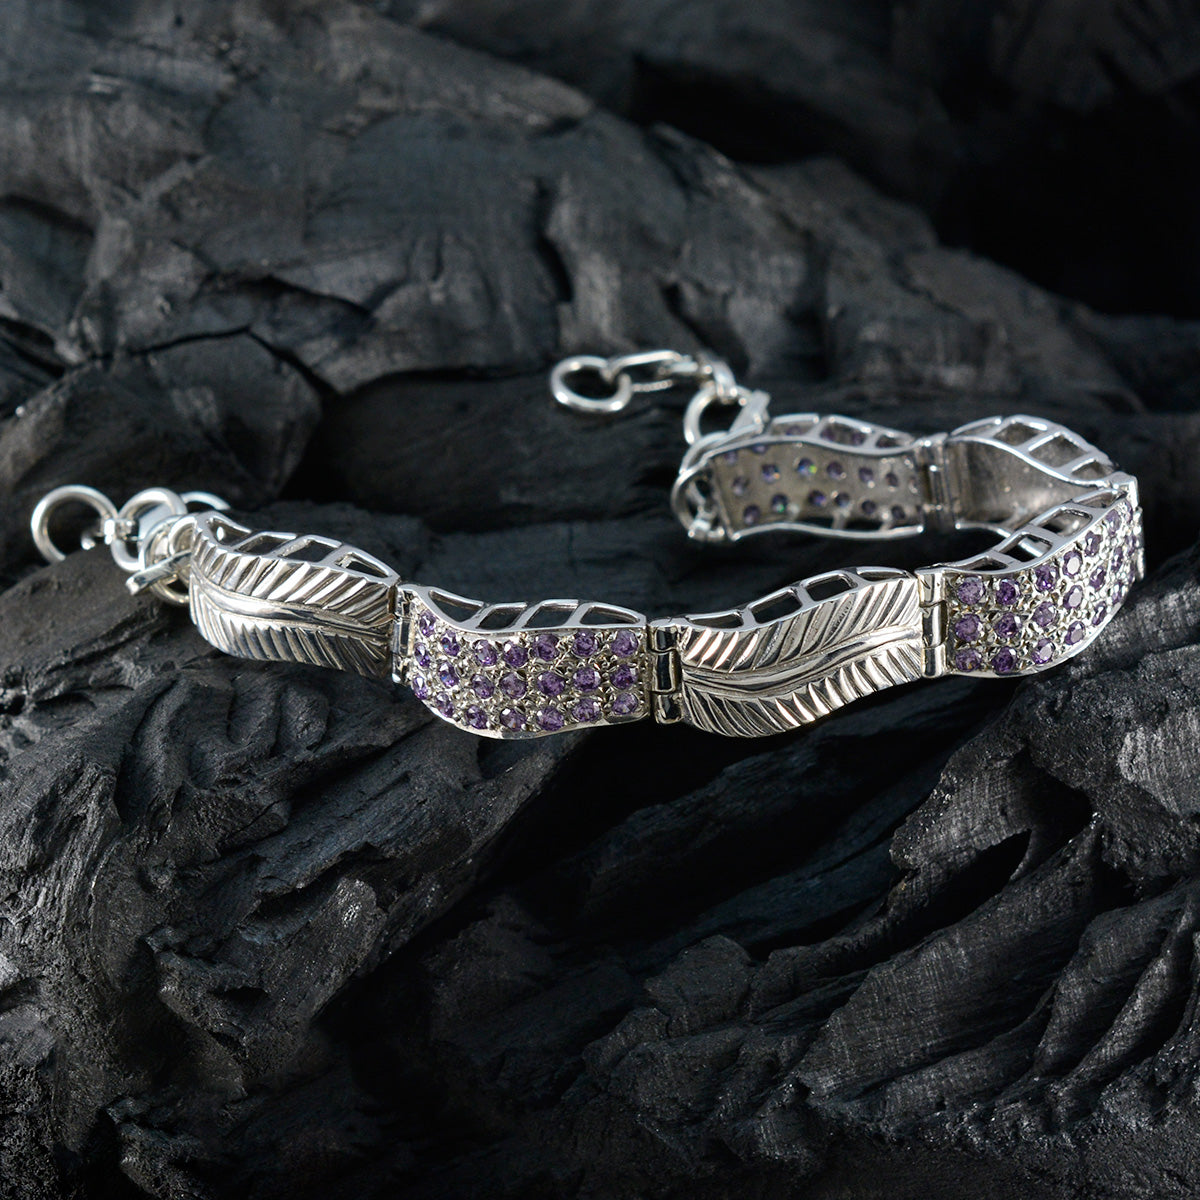 Riyo Complete 925 Sterling Silver Bracelet For Women Amethyst Bracelet Bezel Setting Bracelet with Link Charm Bracelet L Size 6-8.5 Inch.